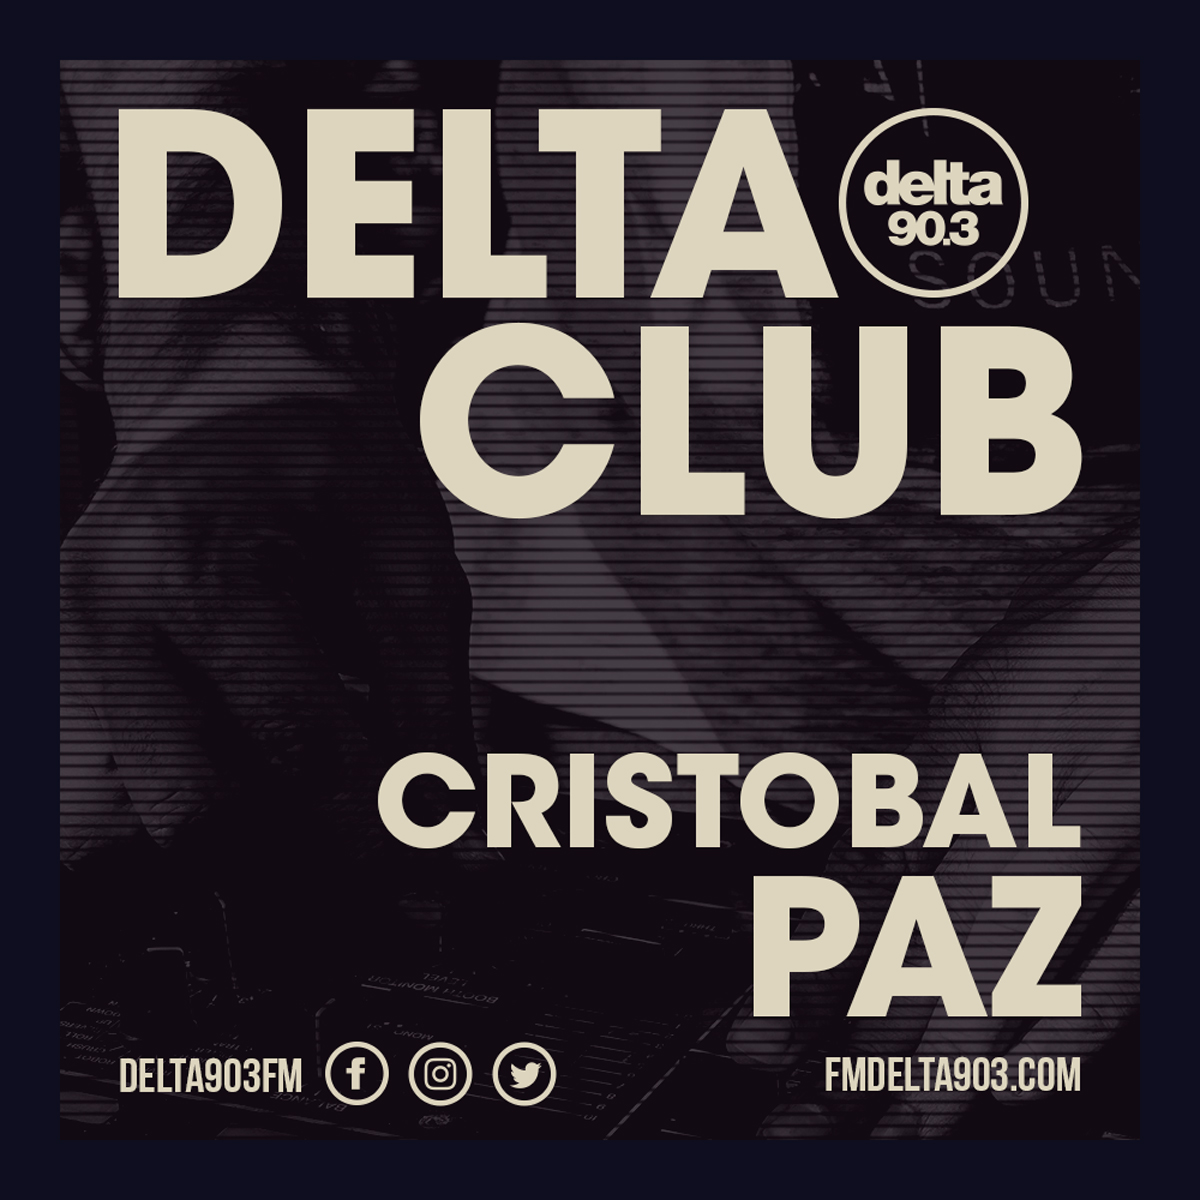 Delta Podcasts - Delta Club presents Cristobal Paz (26.06.2018)